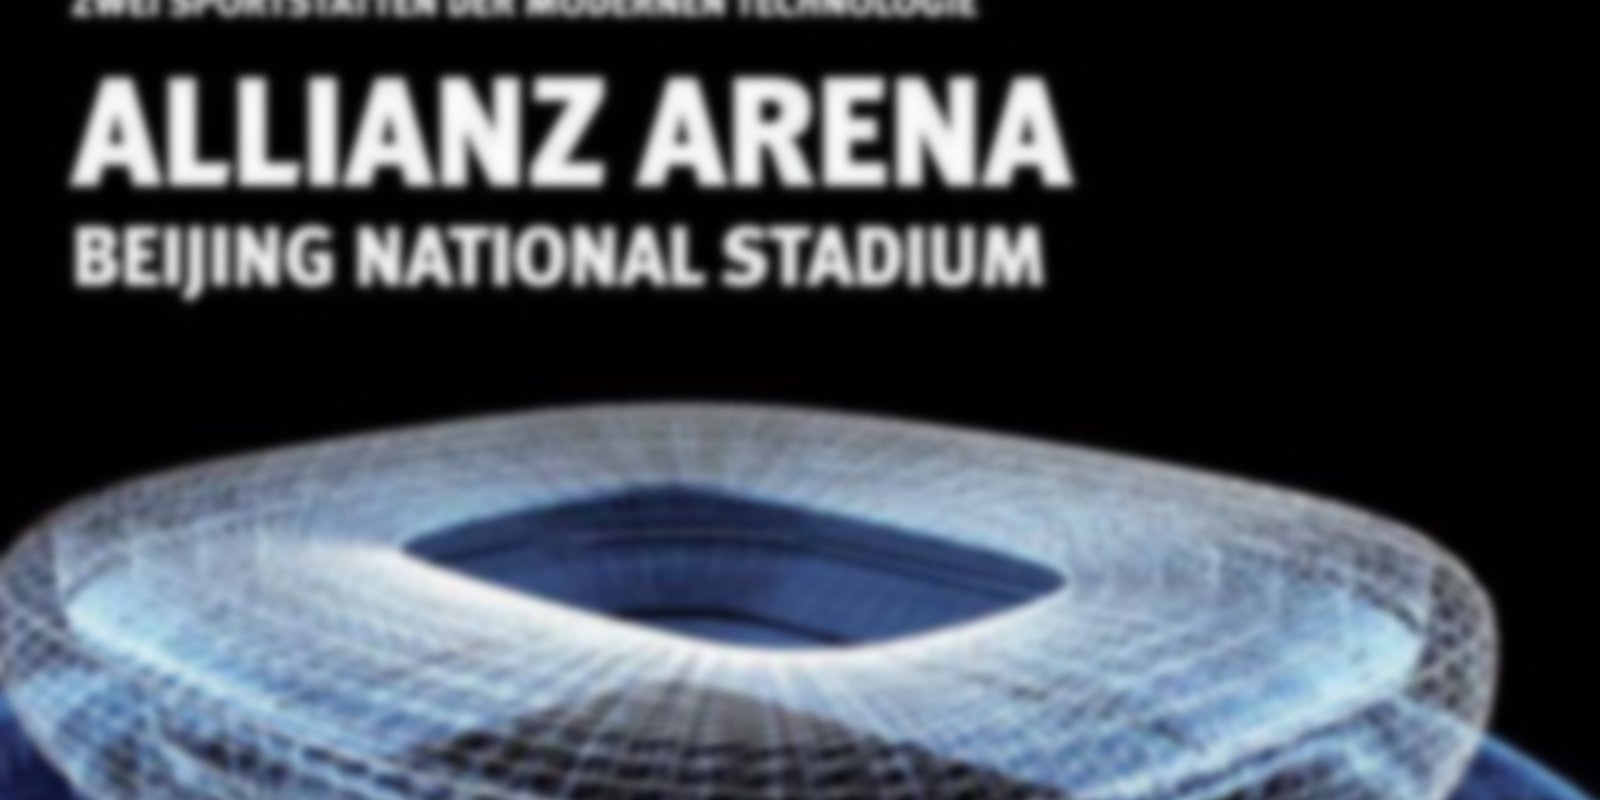 Built for Champions - Allianz Arena & Bejing National Stadium